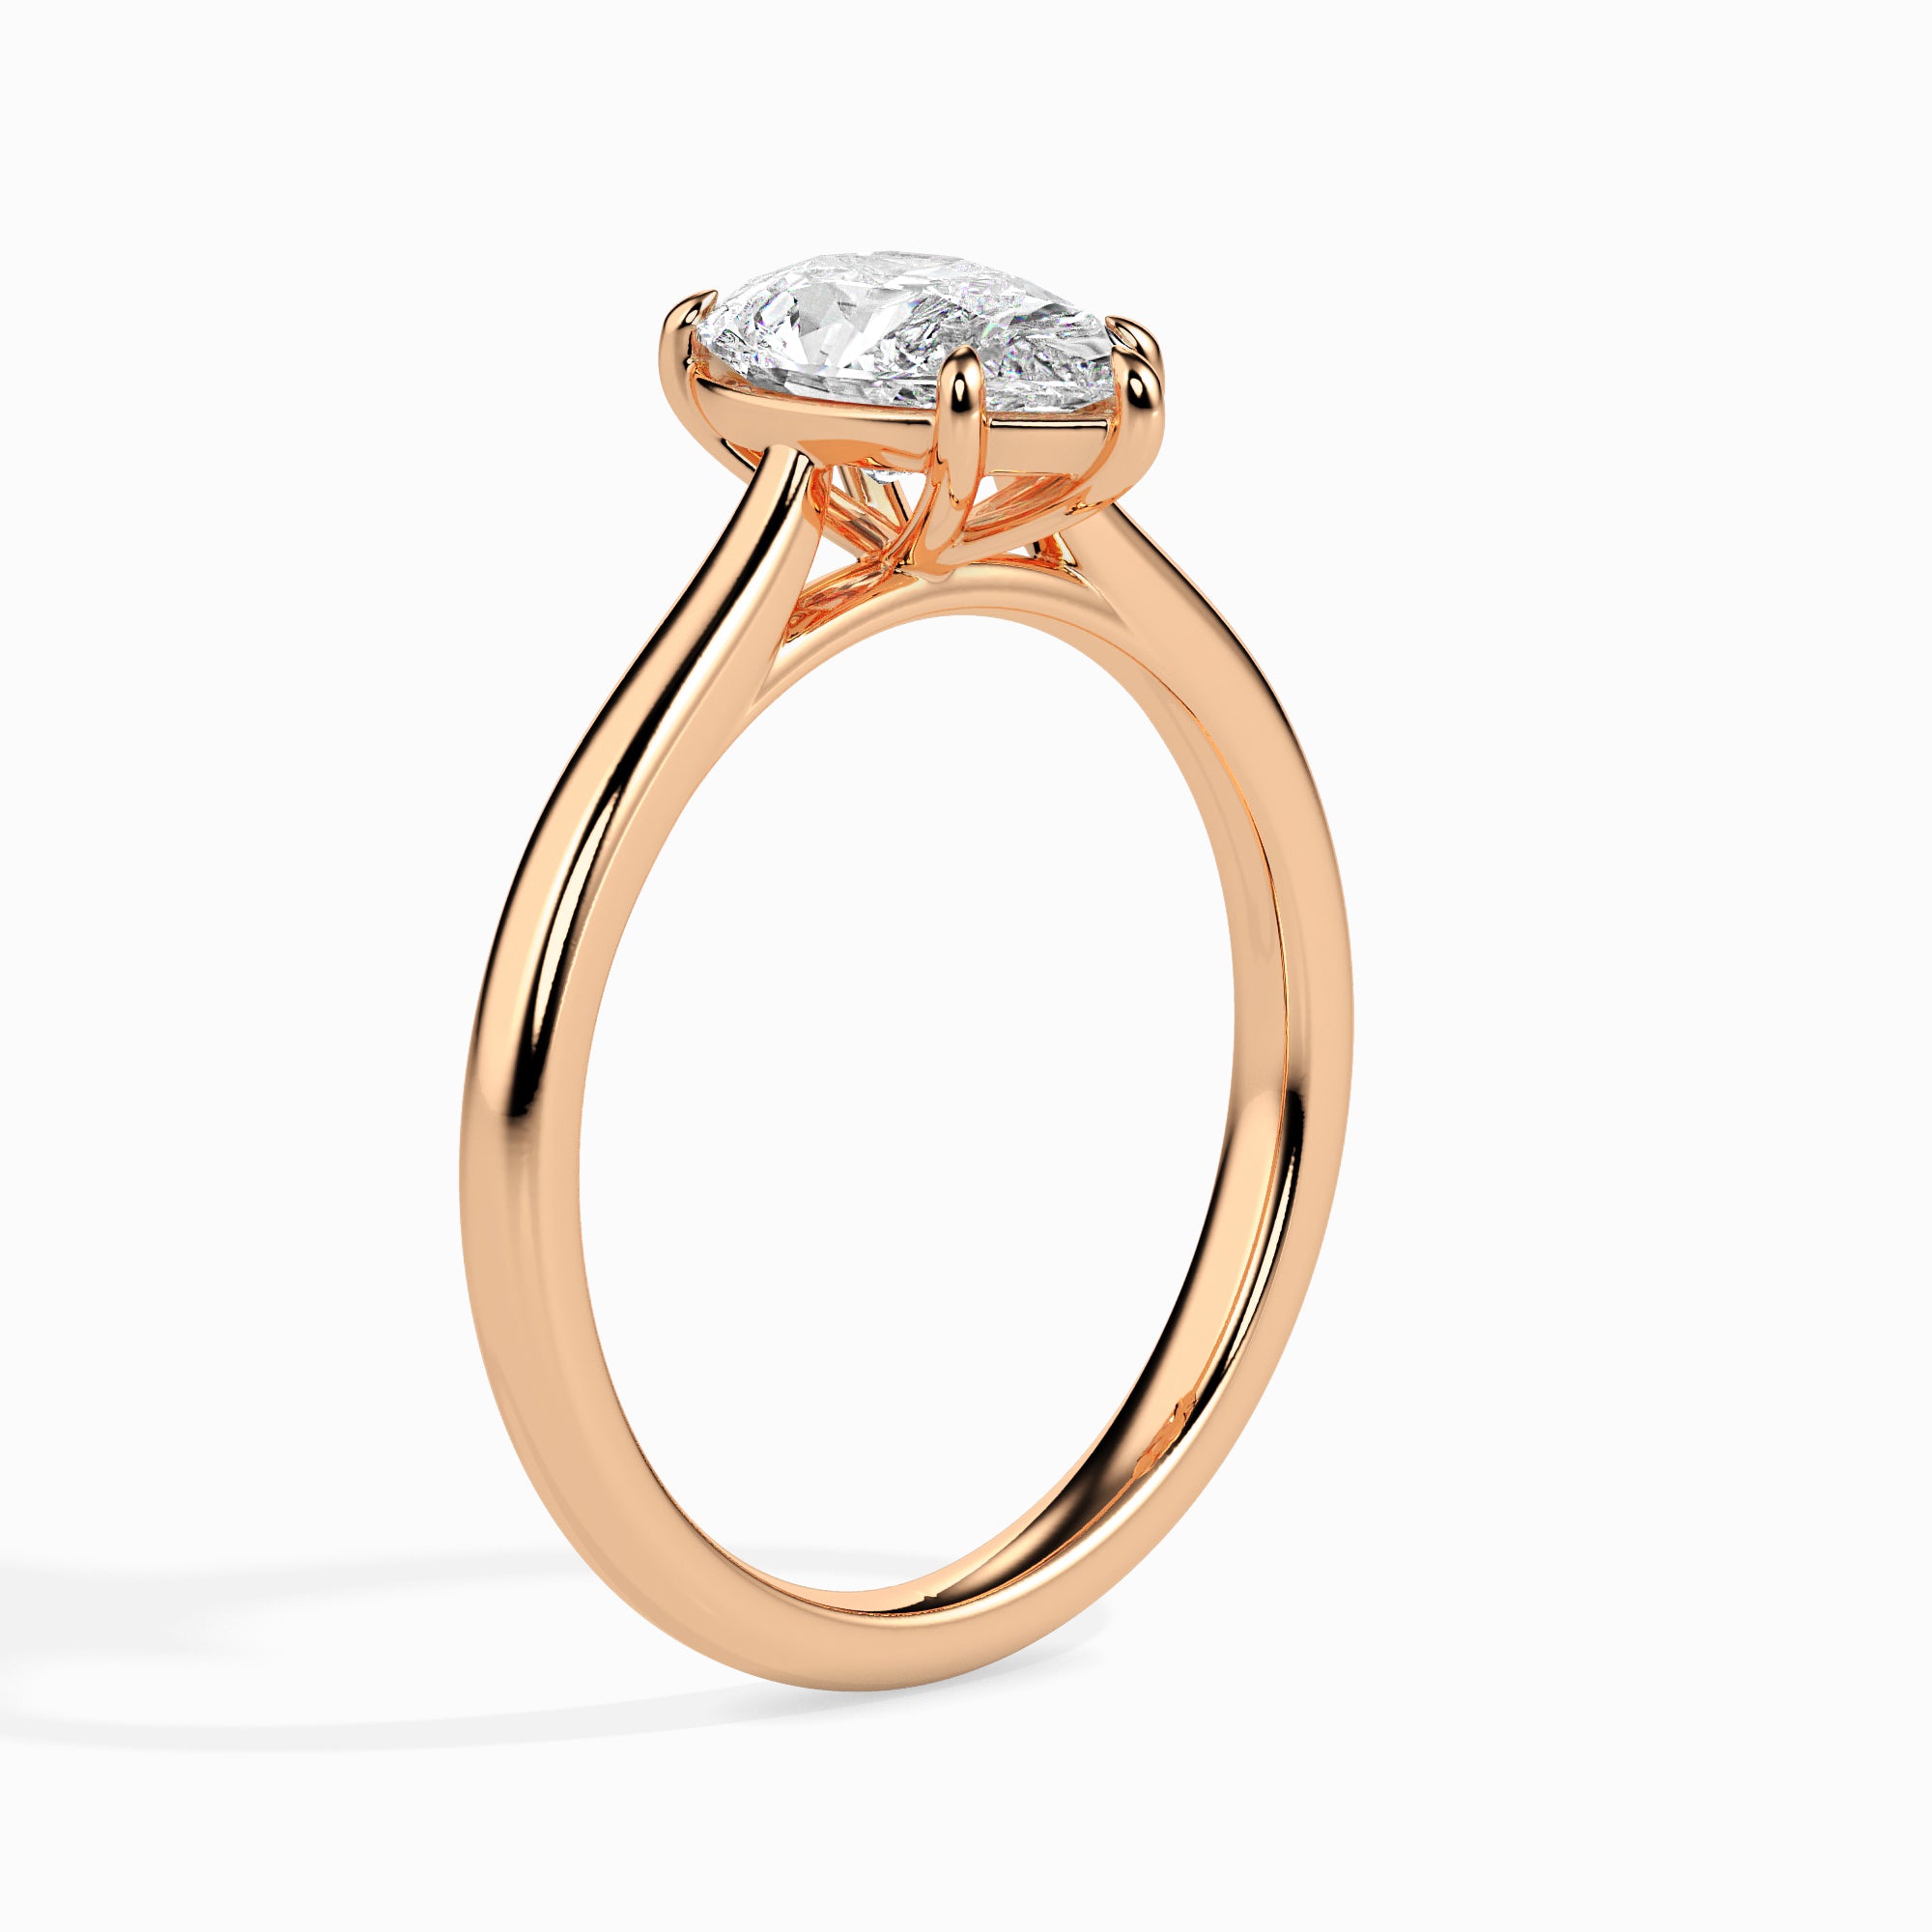 70-Pointer Pear Cut Solitaire Diamond 18K Rose Gold Ring JL AU 19010R-B